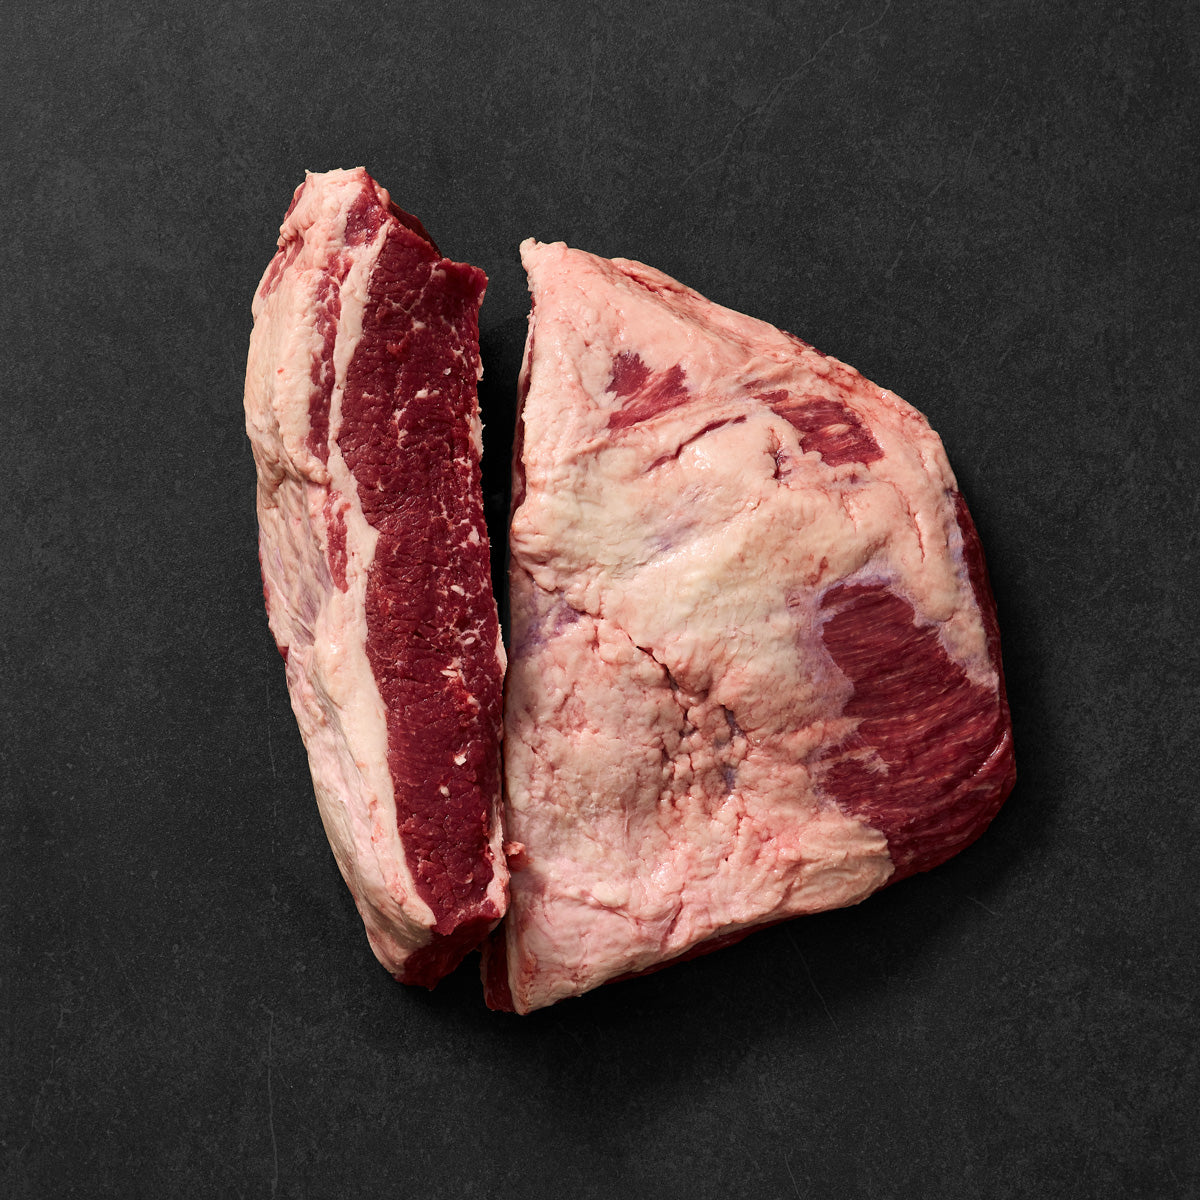 Ellipse Health Meat Box | McKenzie's Meats